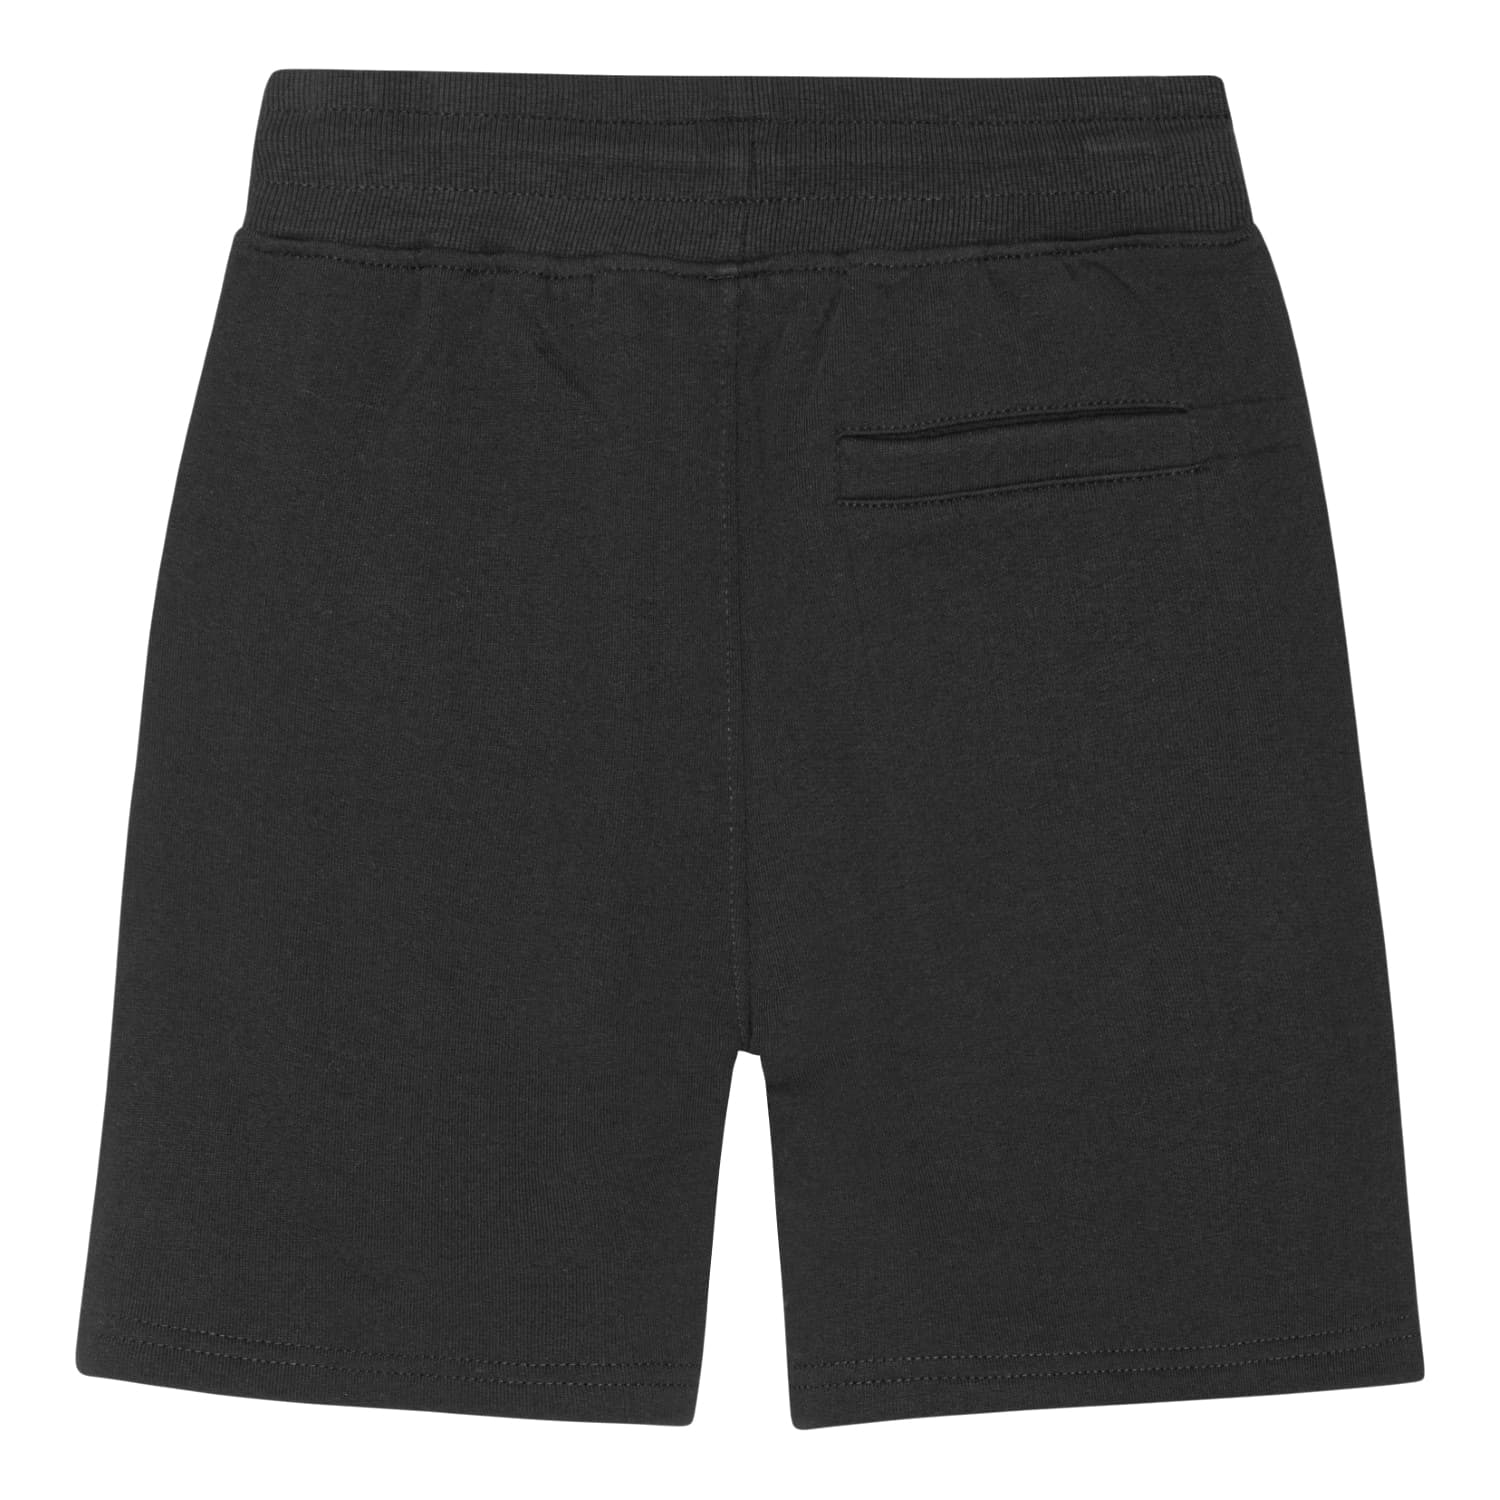 Alw Shorts (Black)